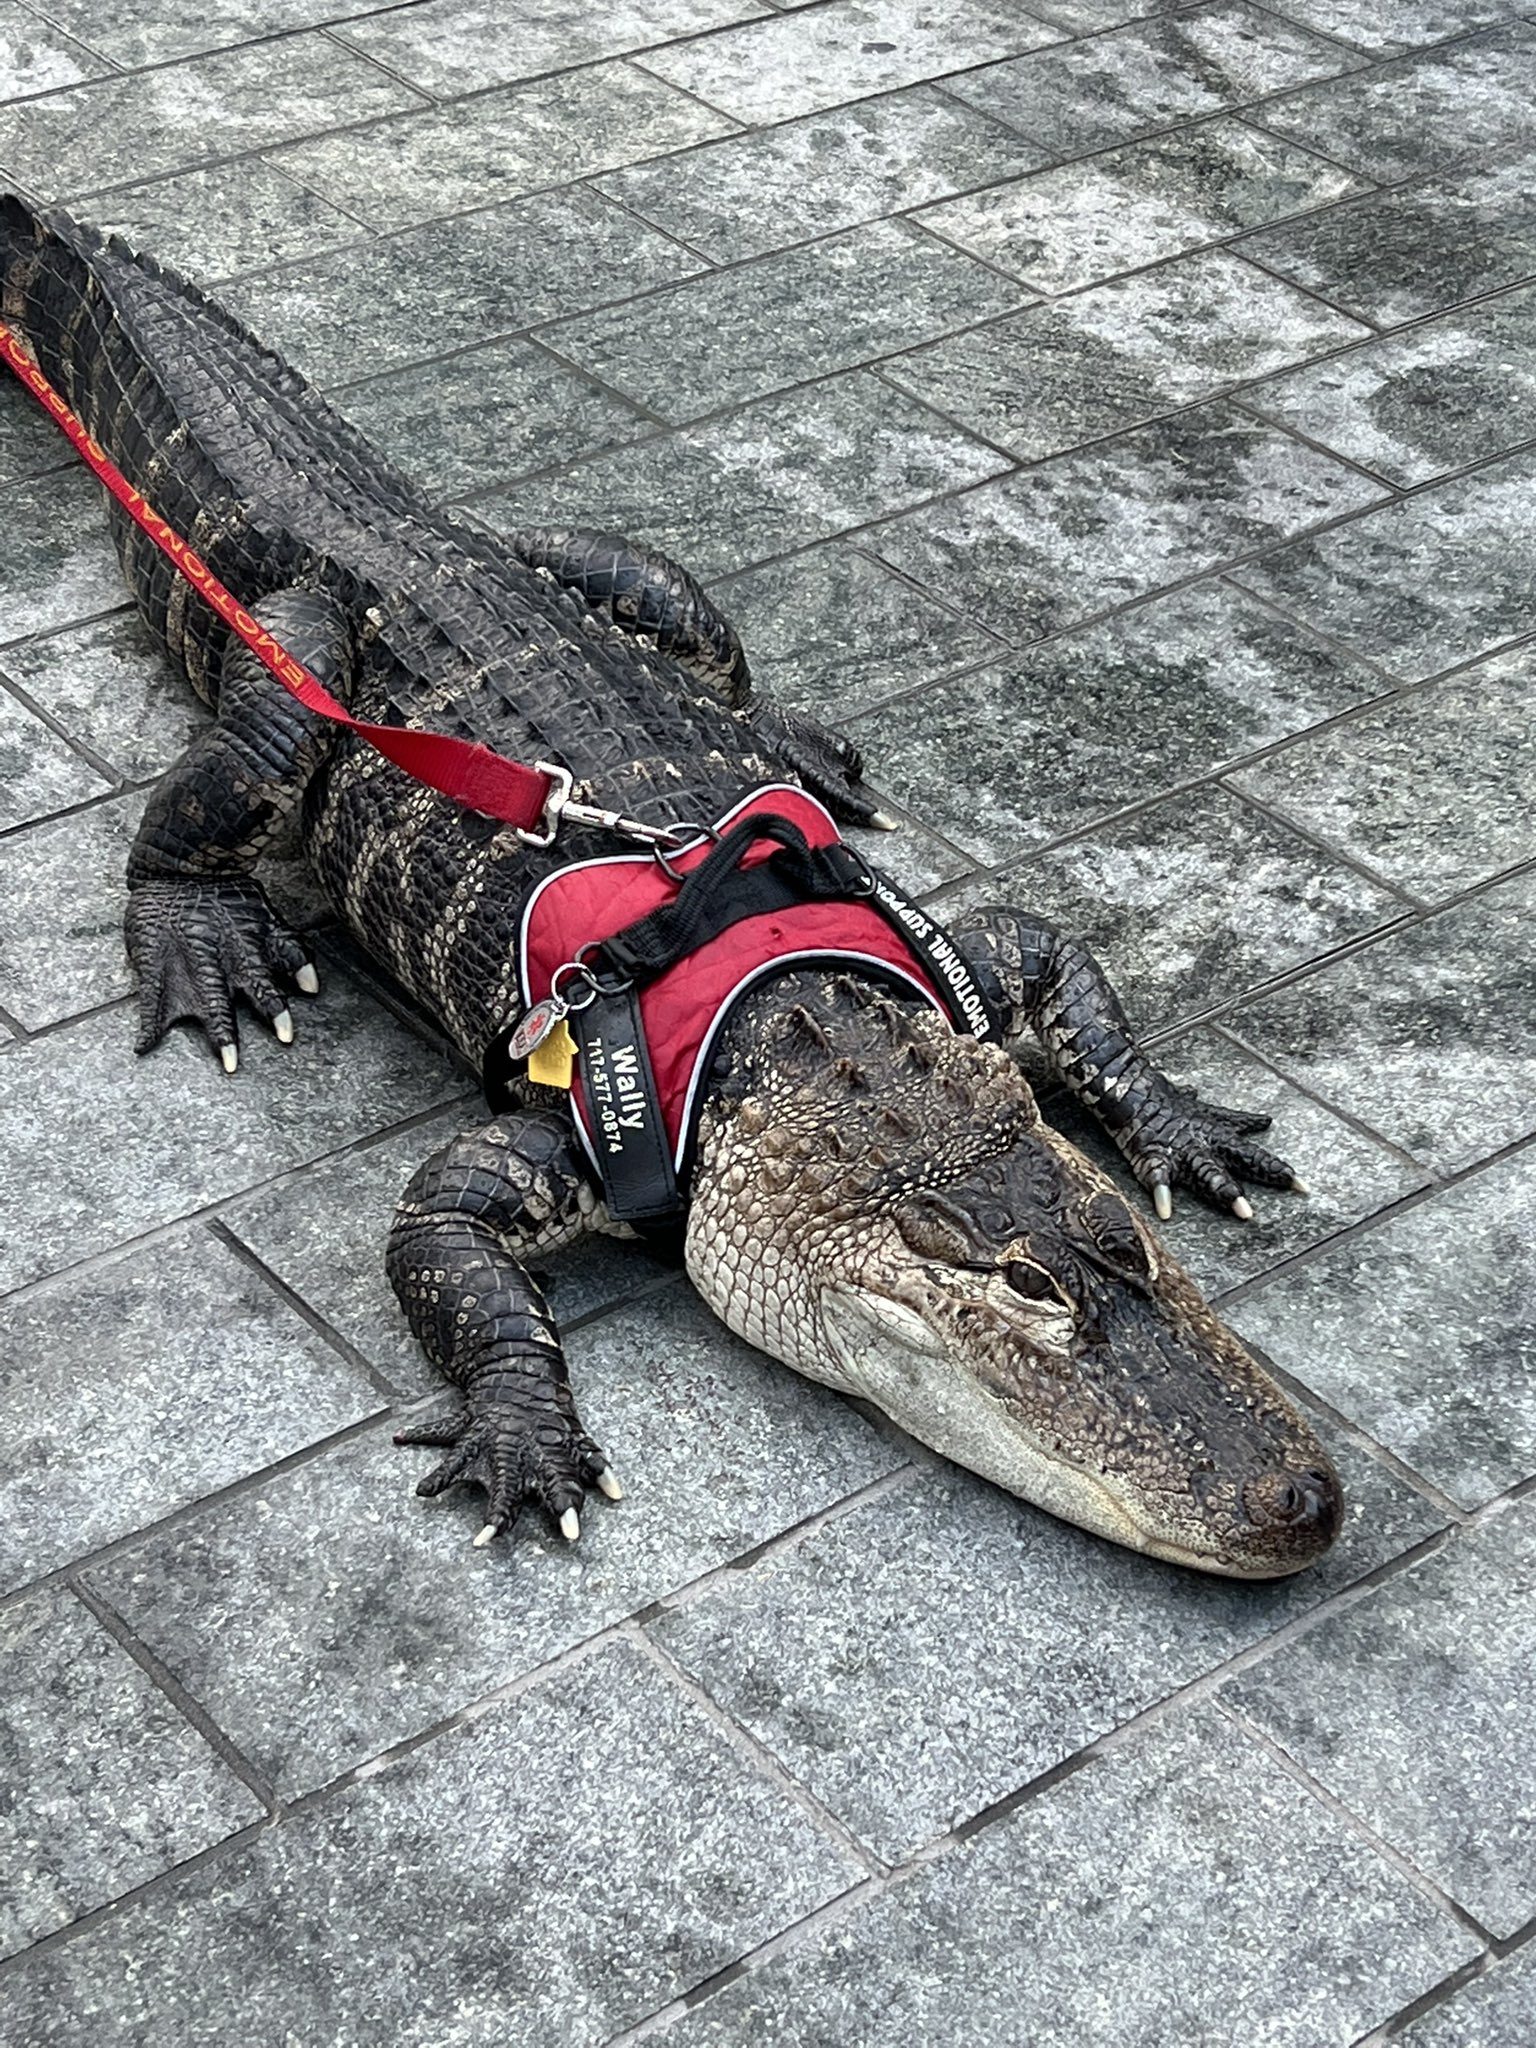 via Twitter - Alligator in park in Philly